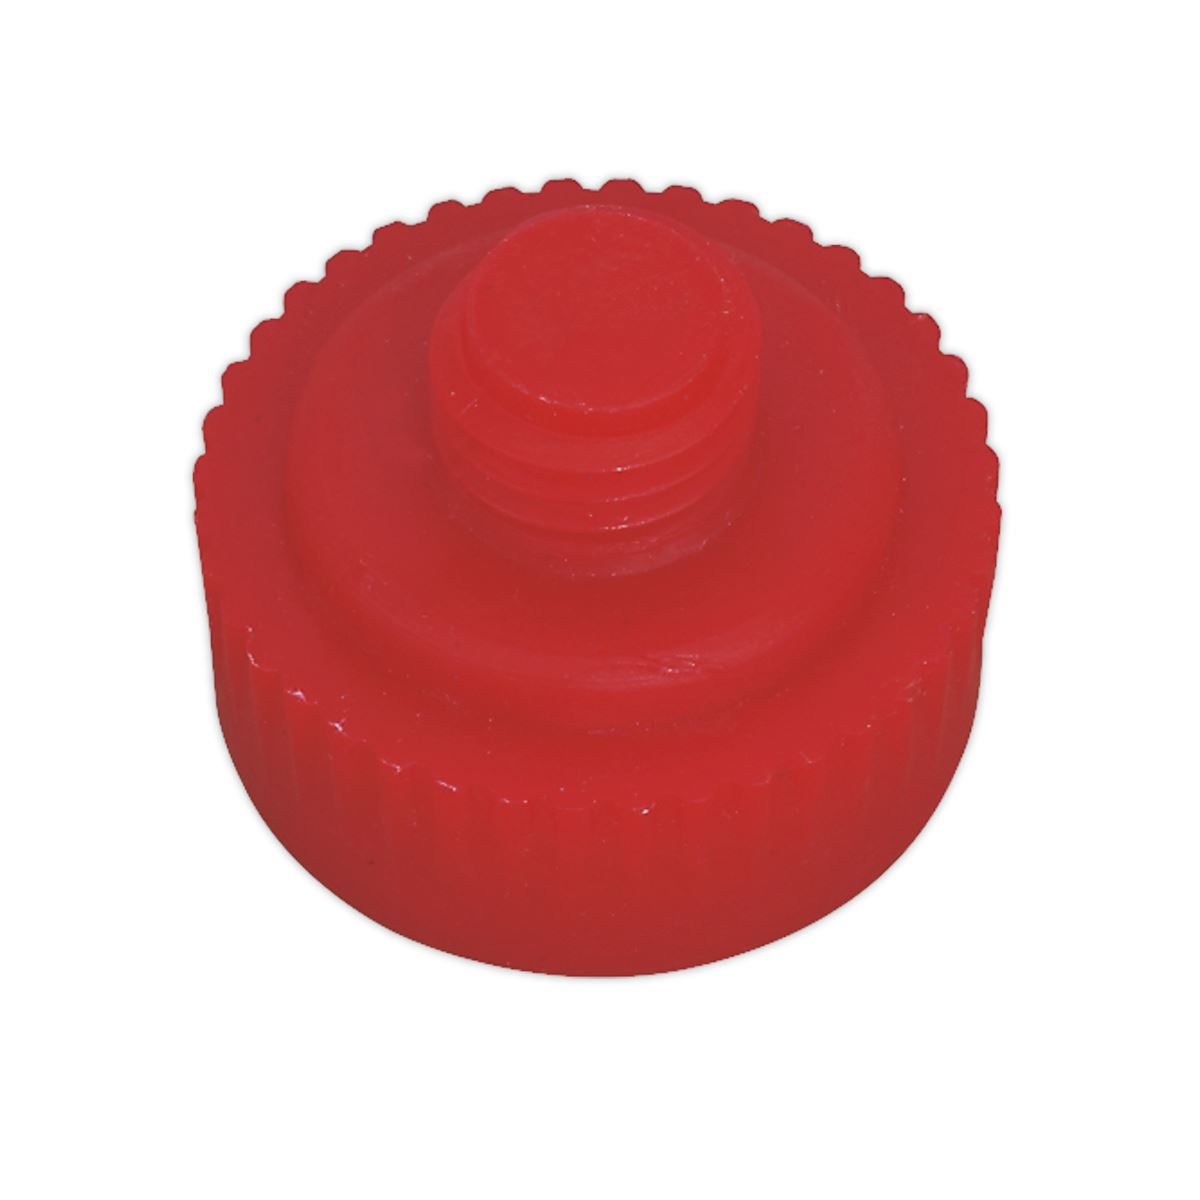 Sealey Premier Nylon Hammer Face, Medium/Red for NFH175